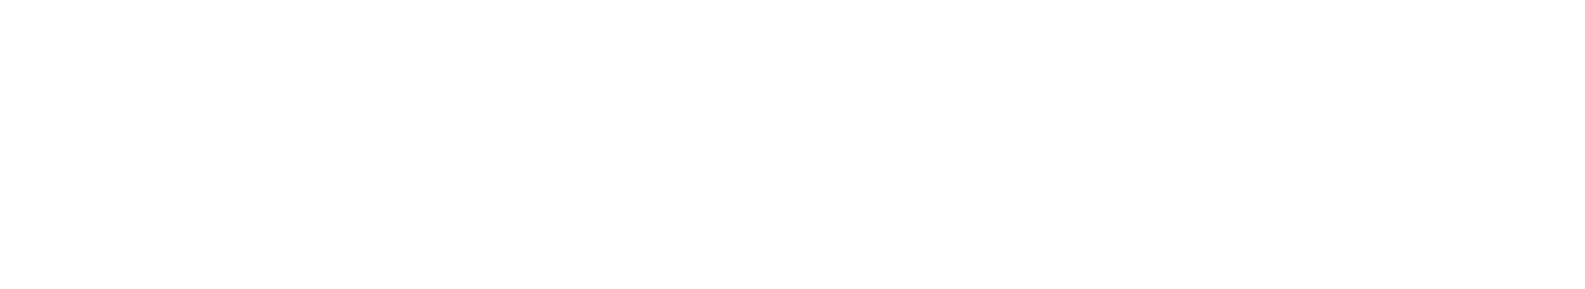 Energous logo large for dark backgrounds (transparent PNG)